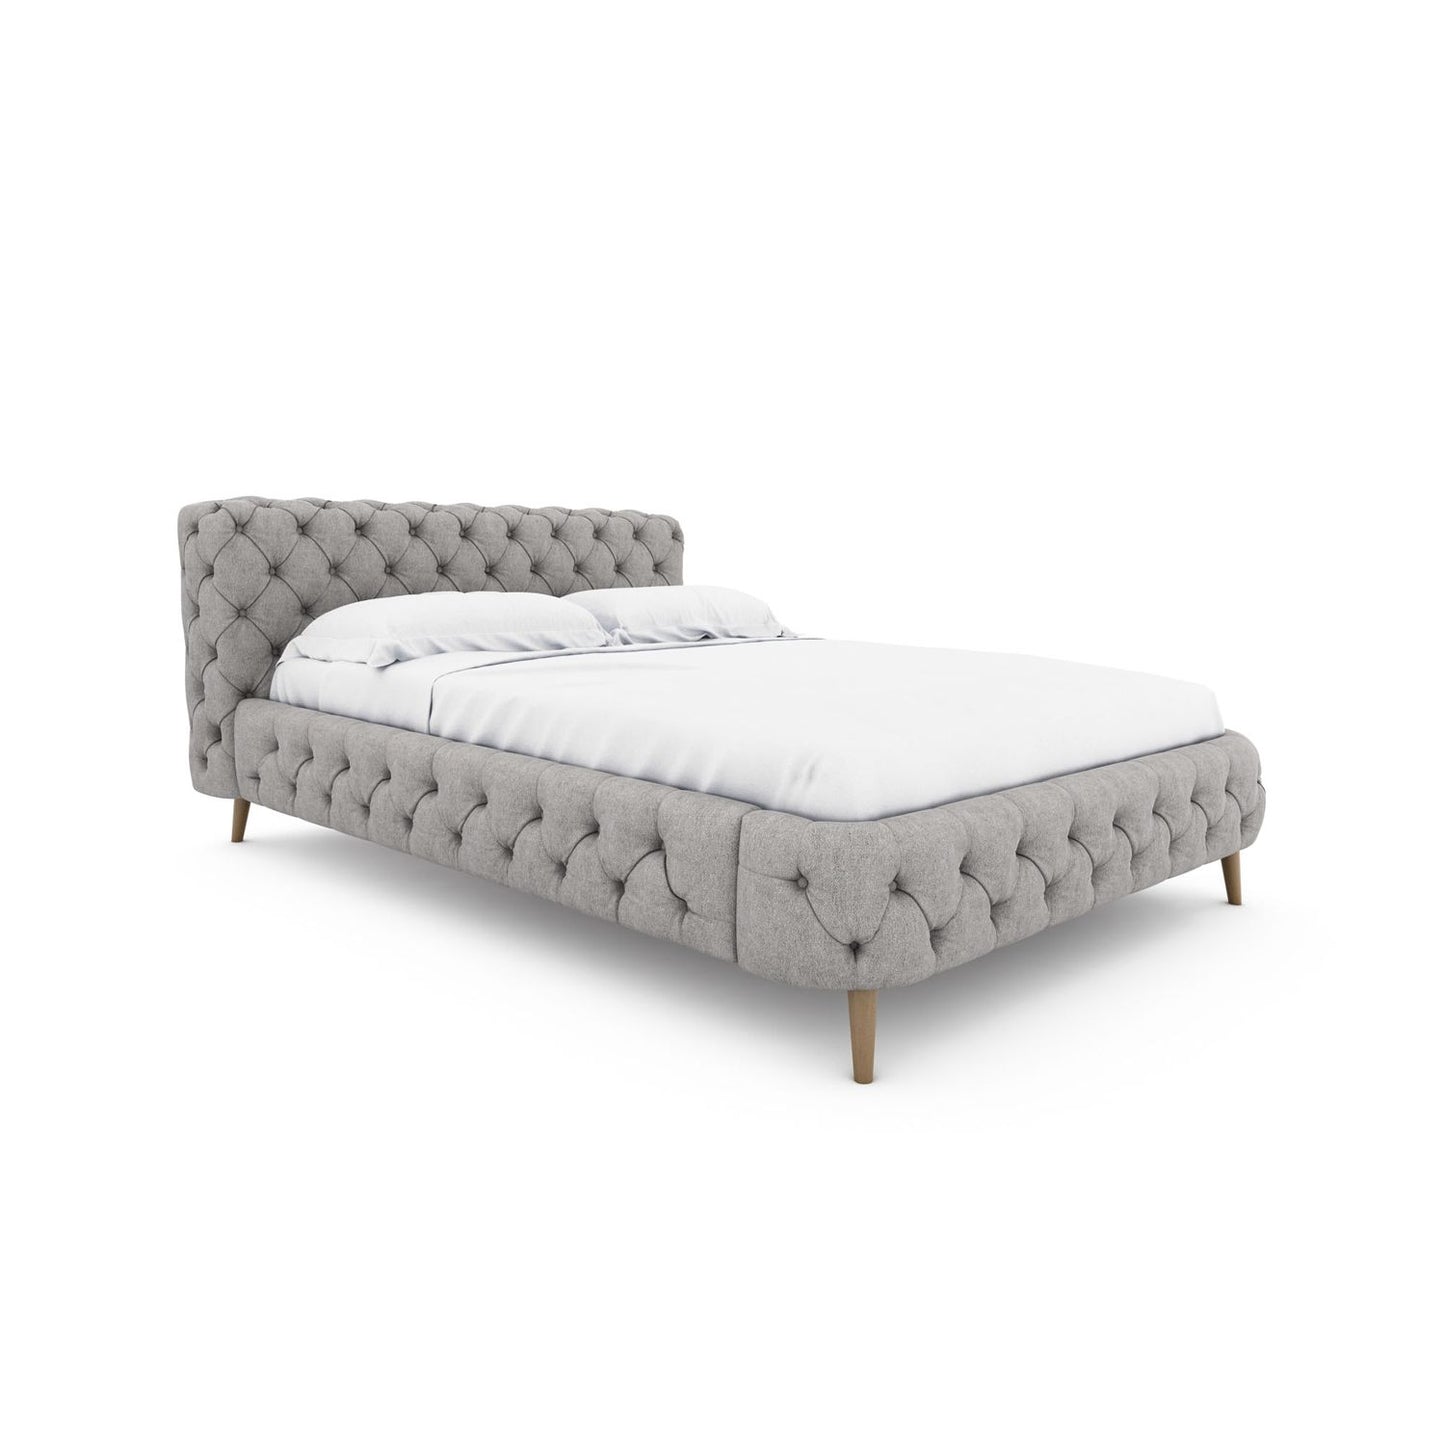 Monty Upholstered Bed - King Size